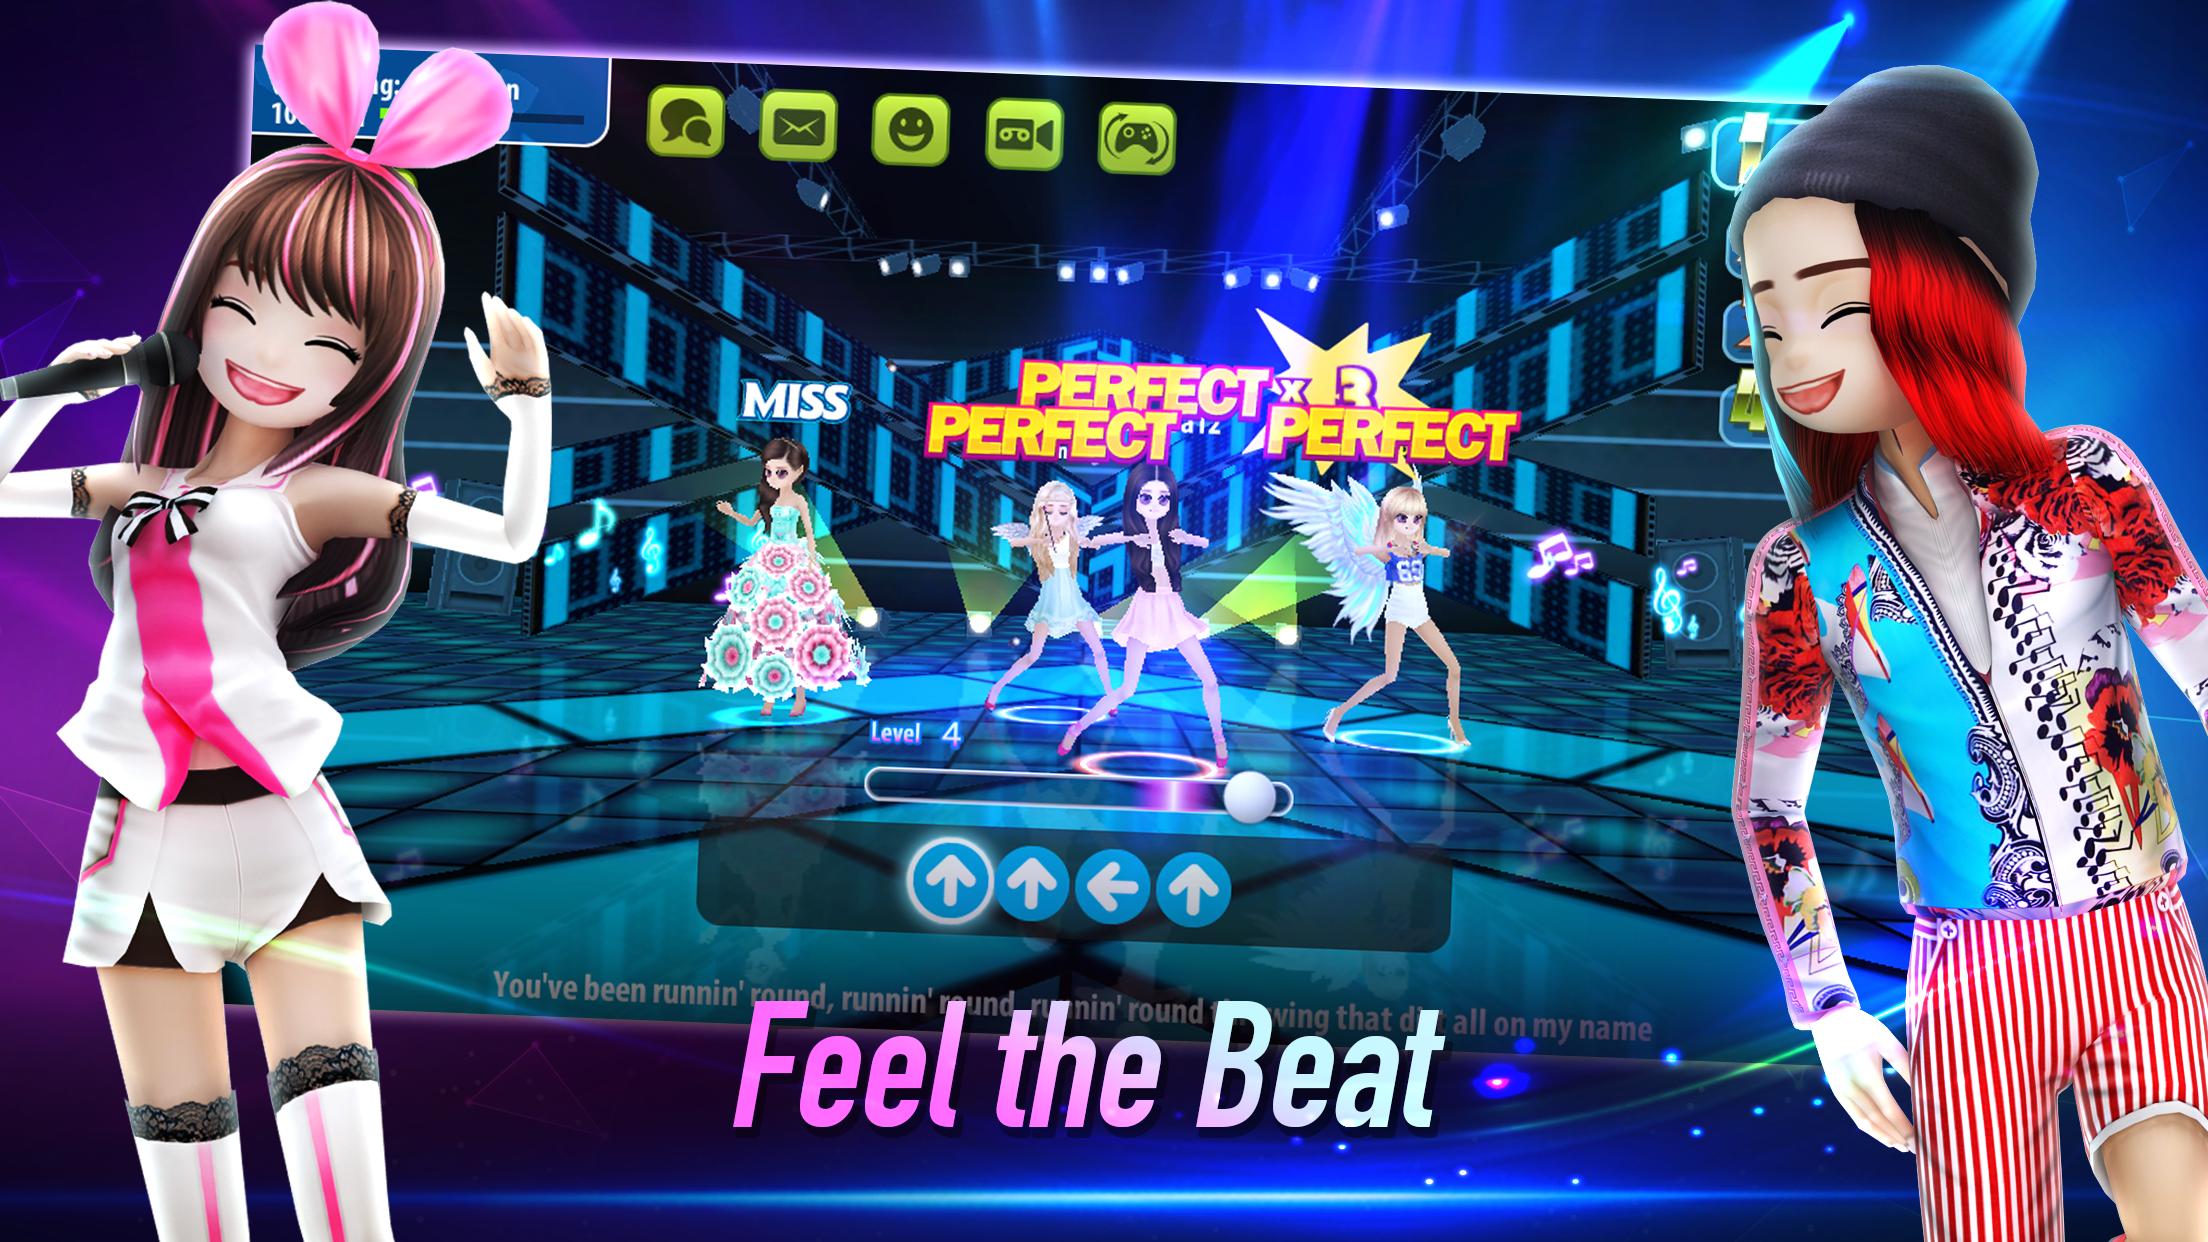 AVATAR MUSIK WORLD - Music and Dance Game 1.0.1 Screenshot 3